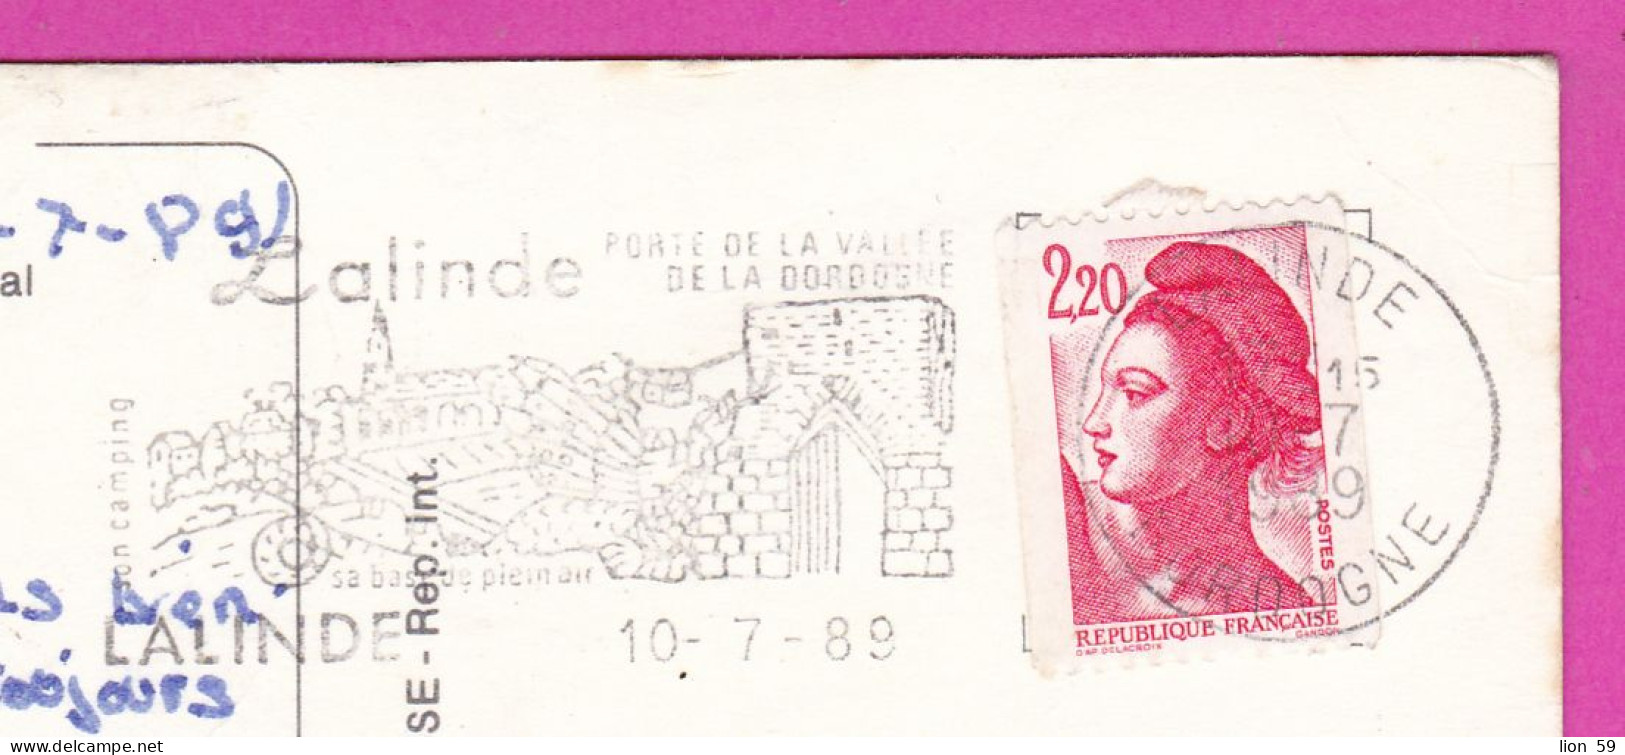 294237 / France - Souvenir De LALINDE PC 1989 USED 2.20 Fr. Liberty Of Gandon Flamme Son Chateau Renaissance  Azay - 1982-1990 Liberty Of Gandon